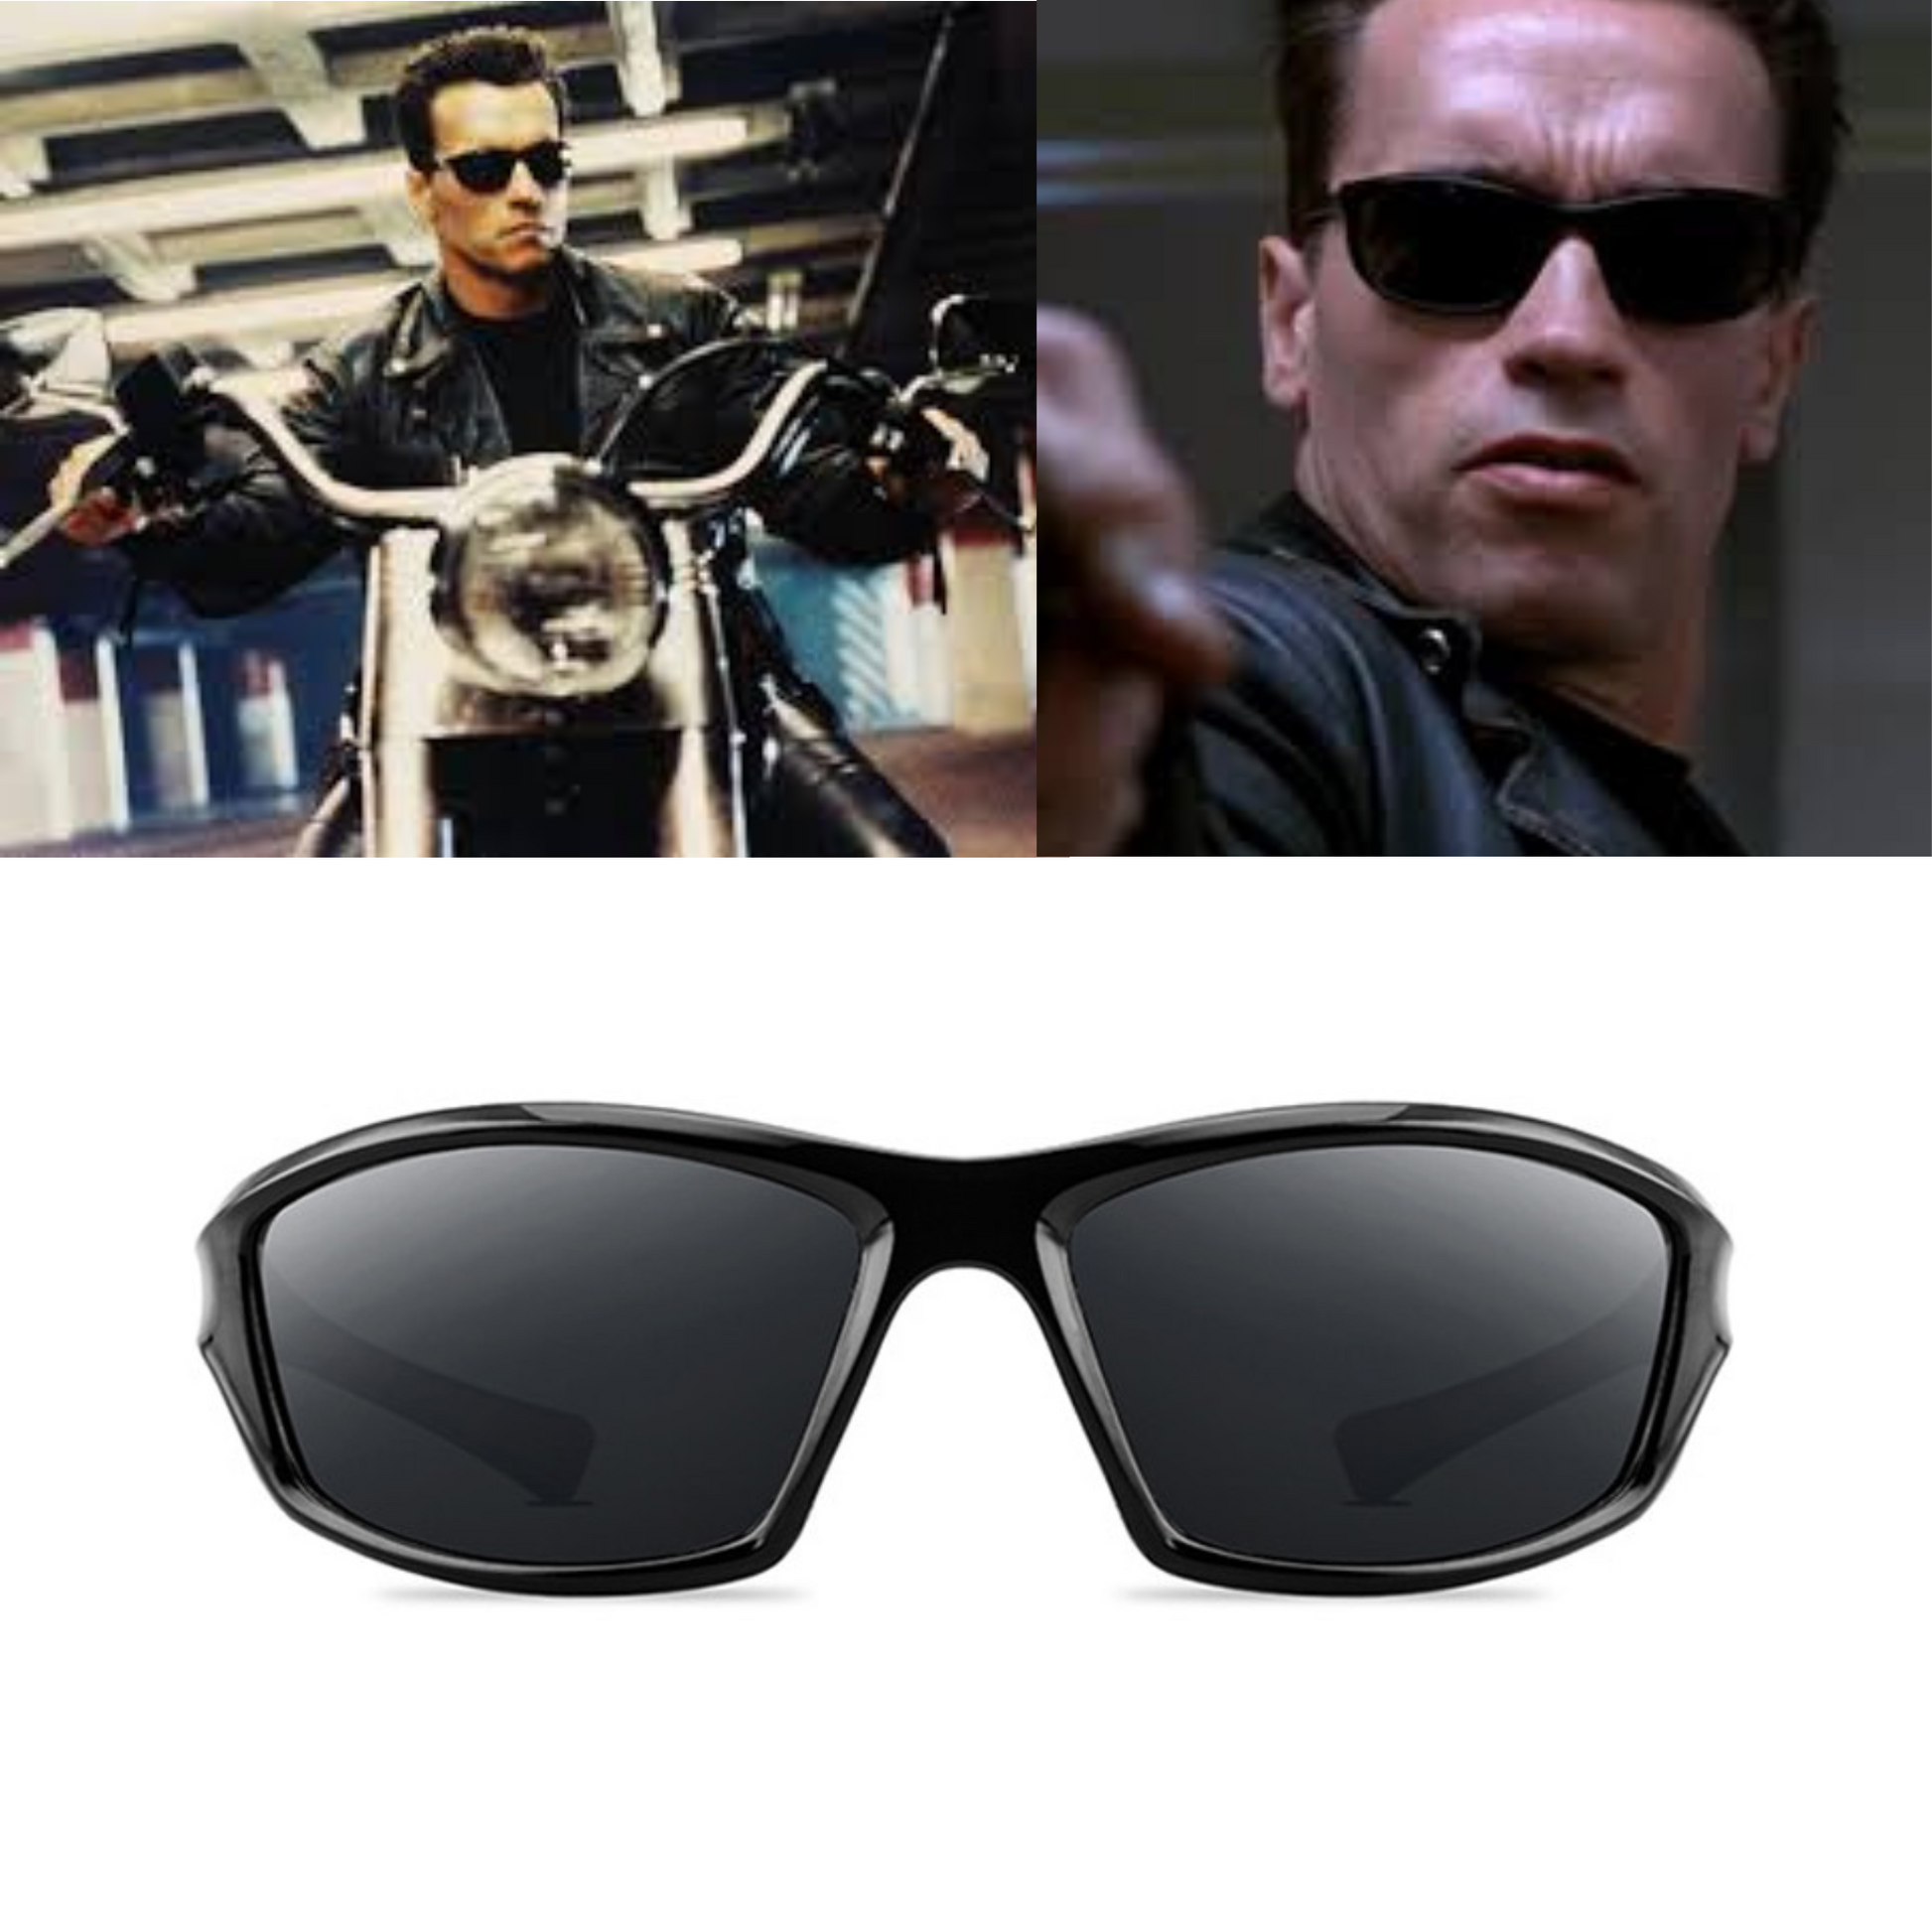 Terminator 2 - Arnie T800 Glasses - Polarized Sunglasses - Classic Design & Night Vision - 1990's Movie Replica - Protection UV 400-